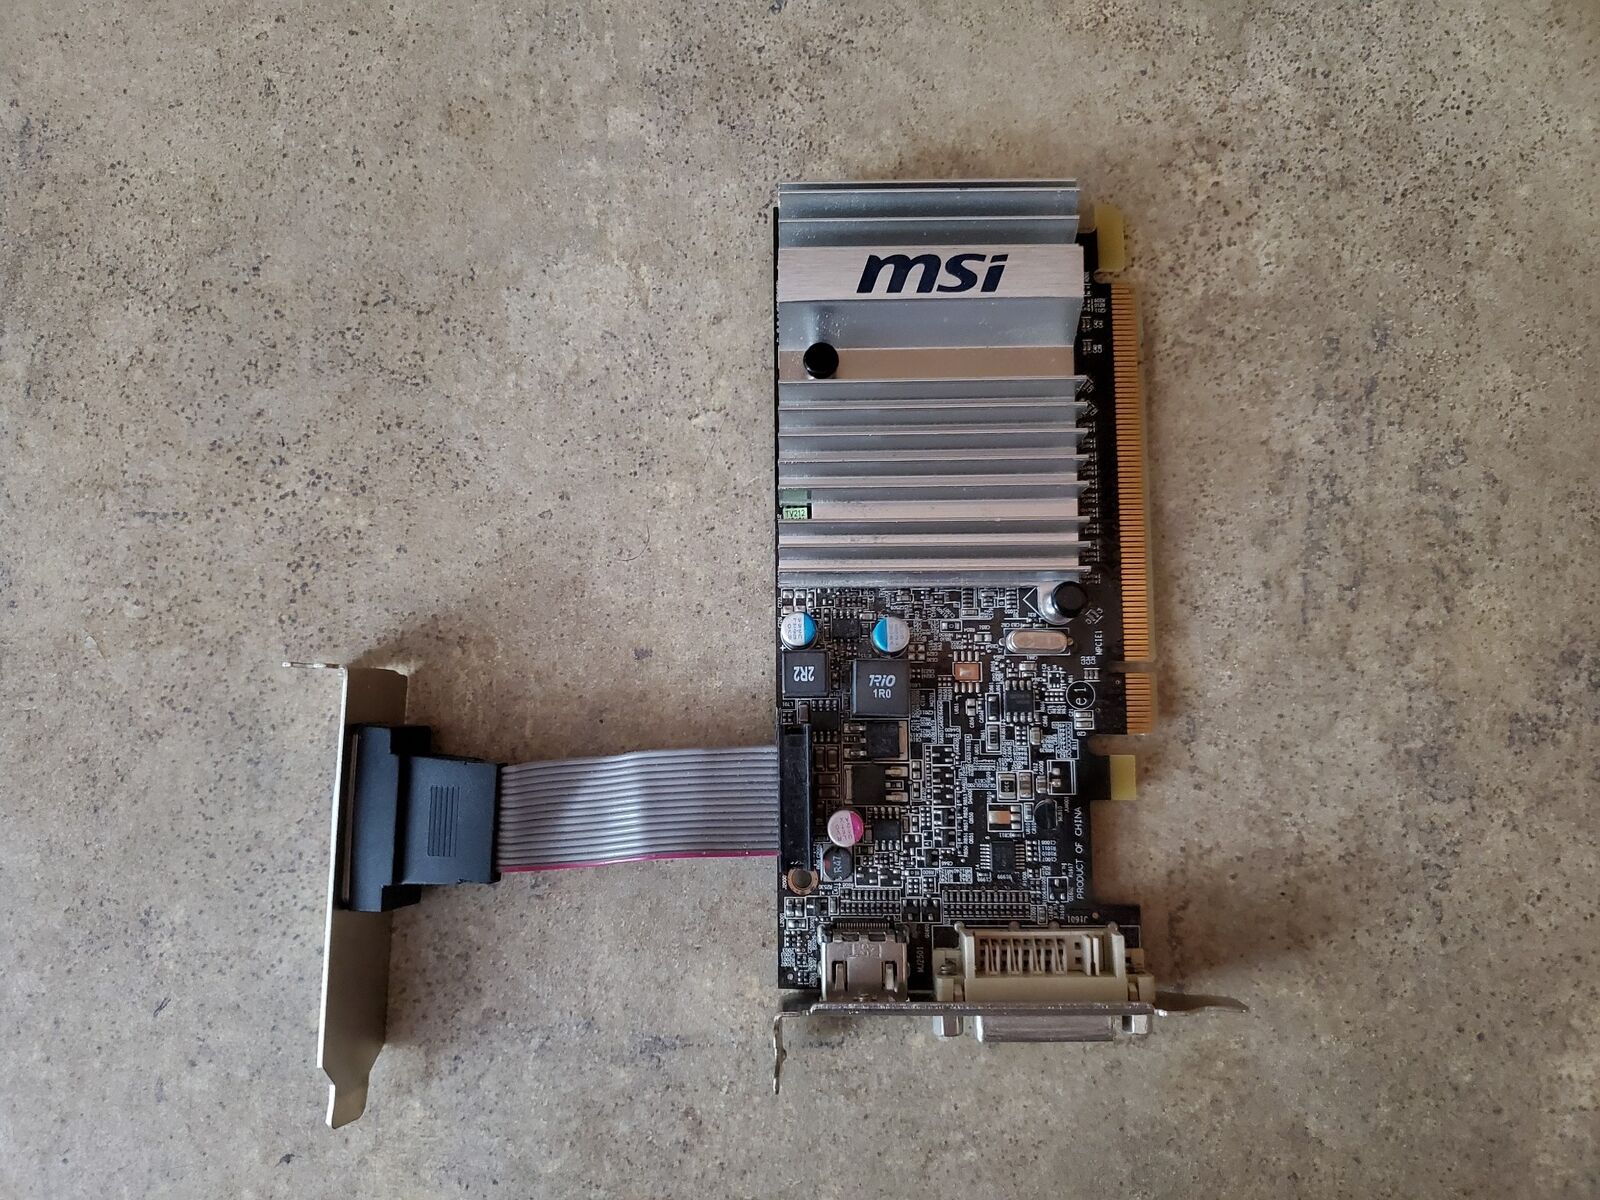 MSI ATI RADEON R5450-MD1GD3H/LP 1GB DDR3 VGA/HDMI/DVI PCI VIDEO CARD A3-7